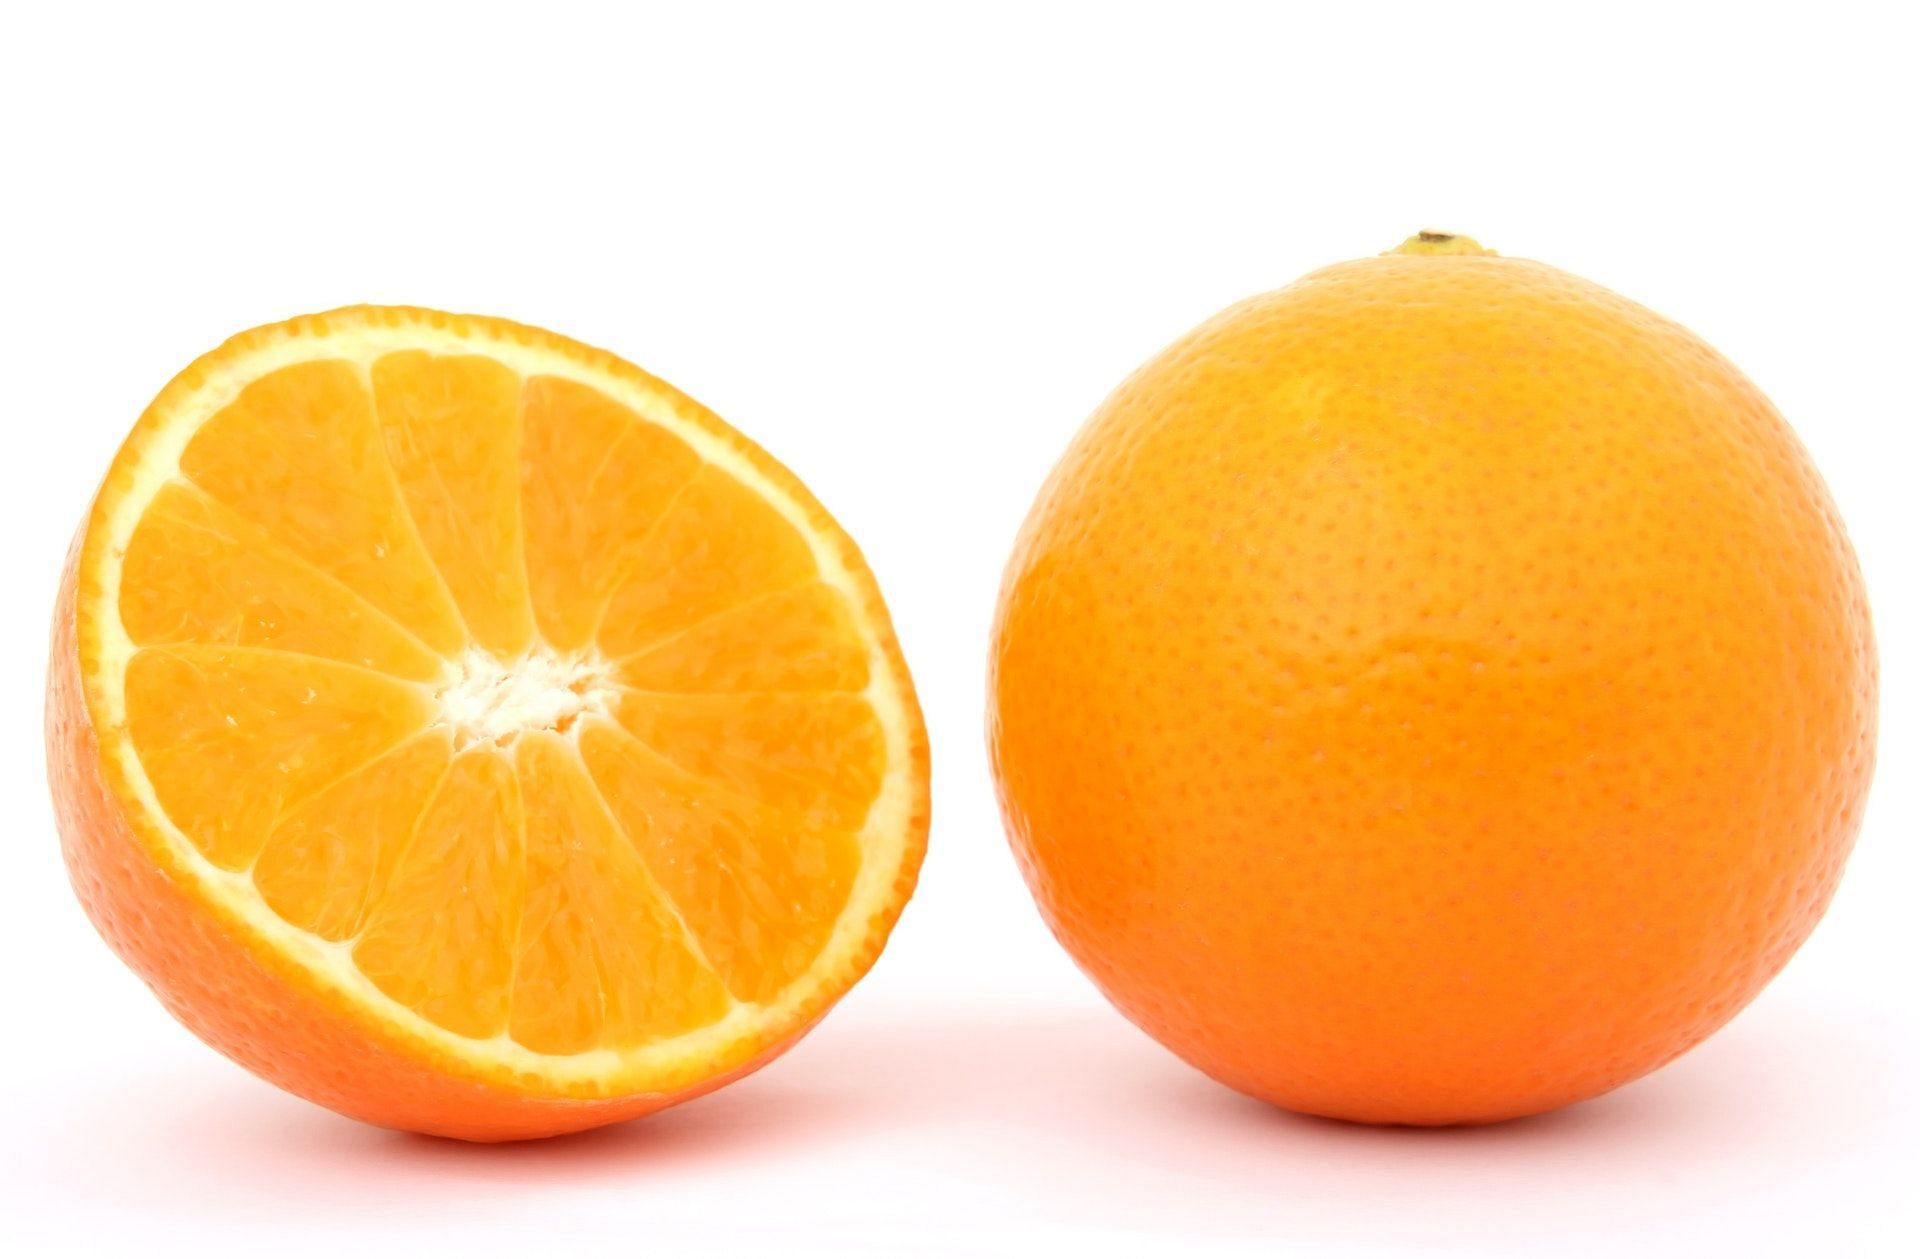 Oranges are high GI fruits. (Photo via Pexels/Pixabay)